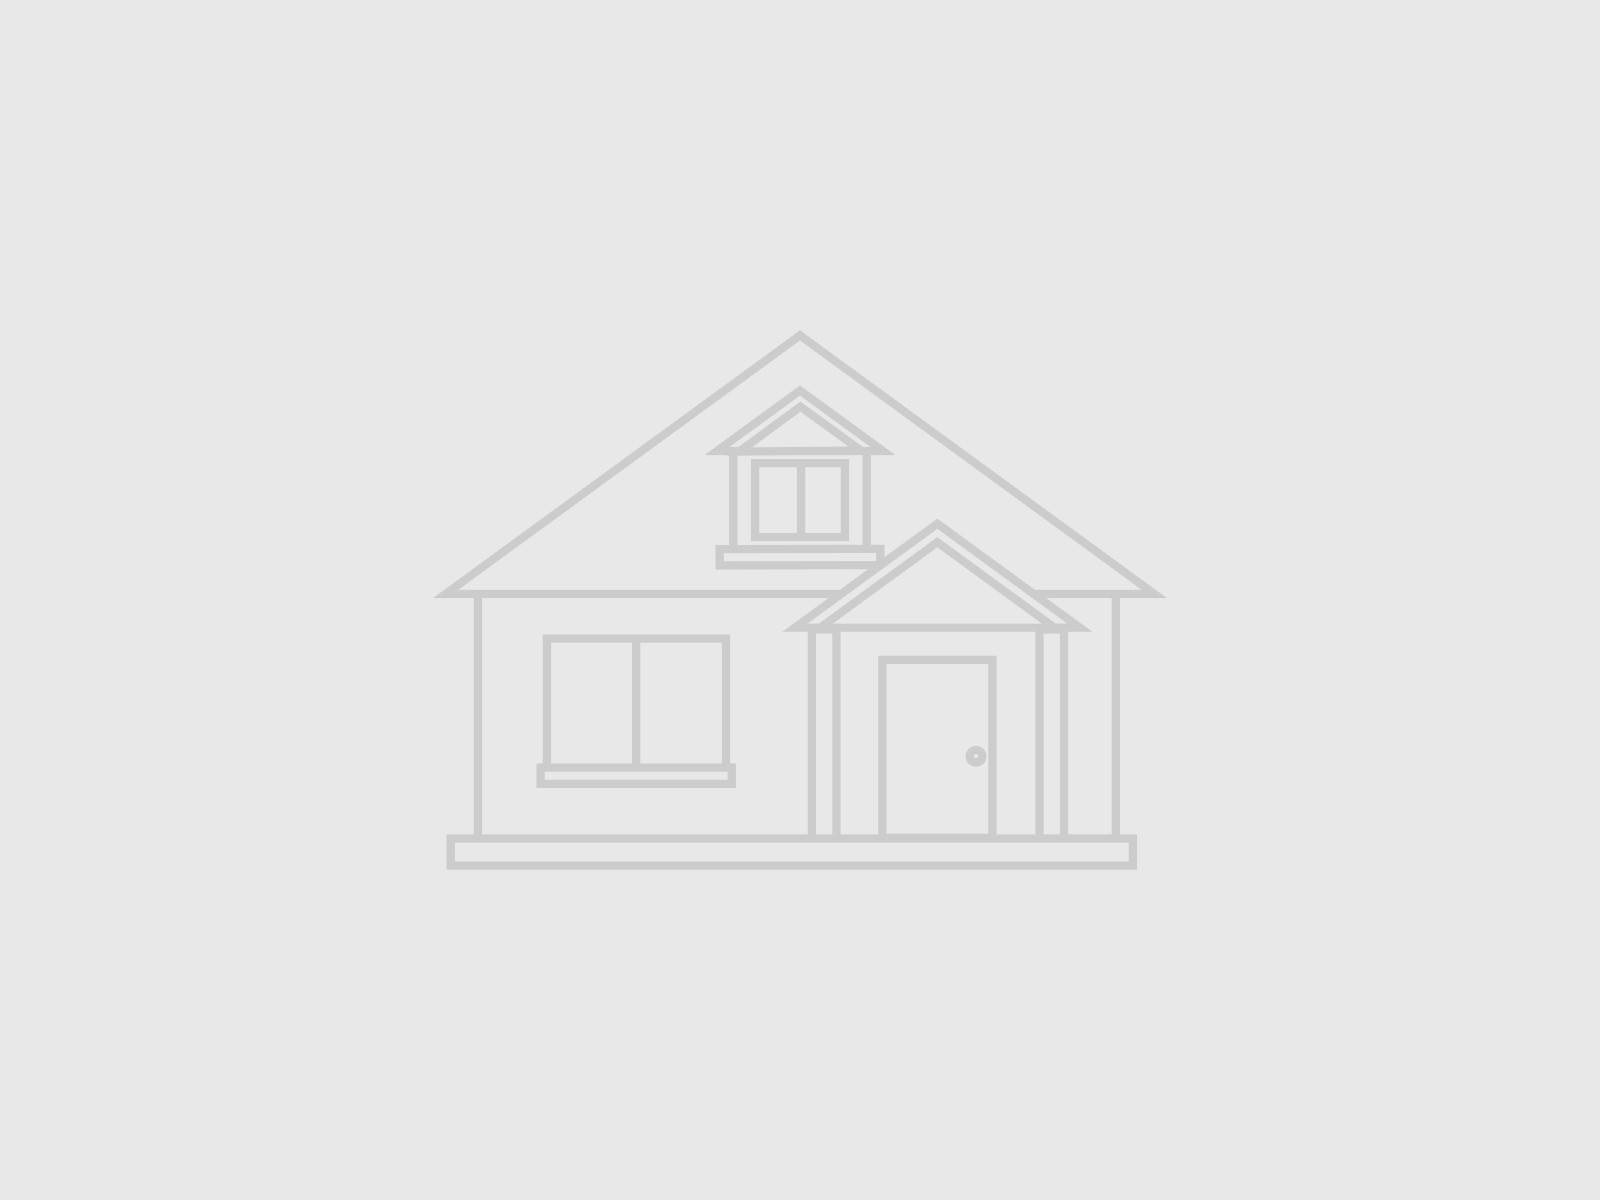 Single Family Homes for Sale at 118 250 118 250 Mapleton, Utah 84664 United States